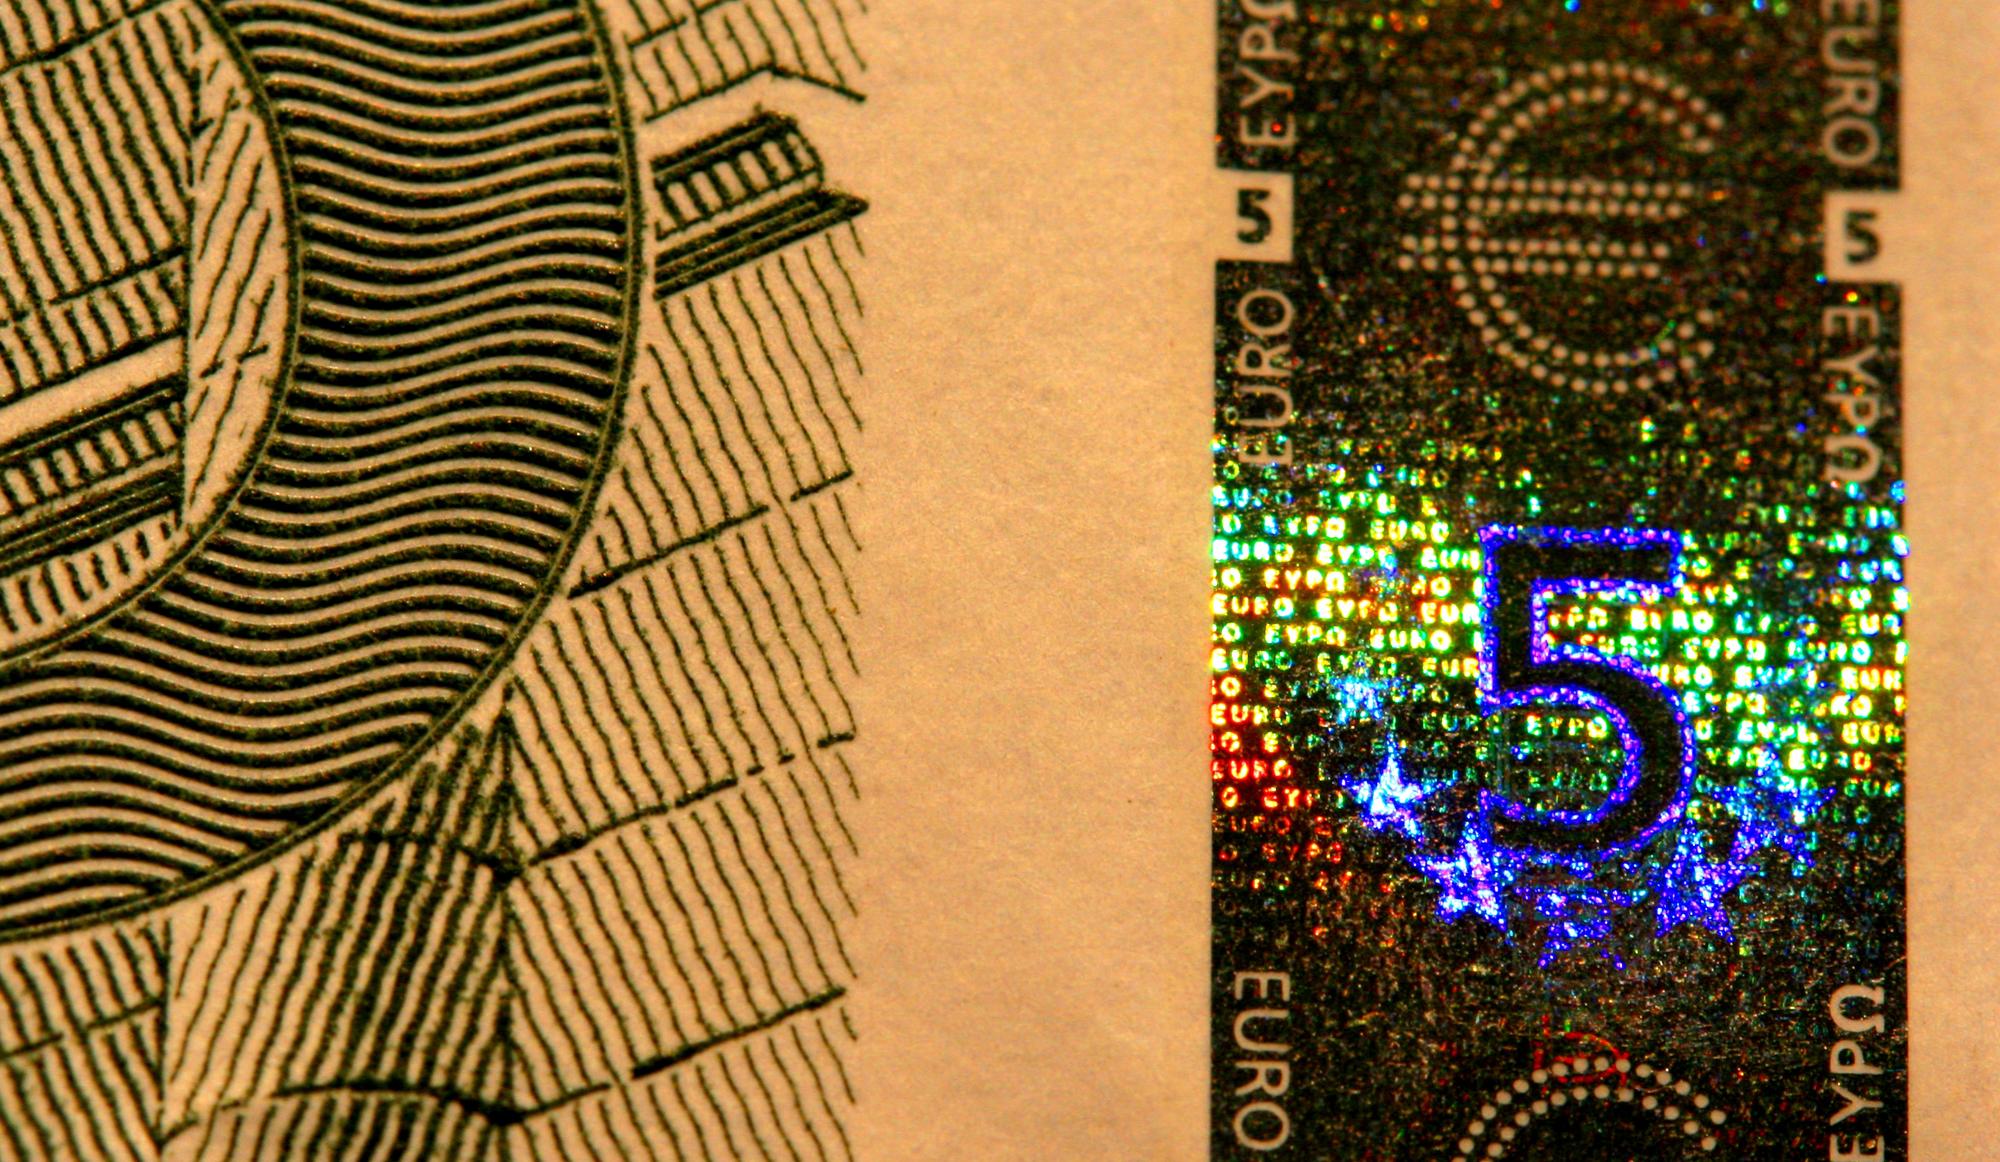 Holograma de billete de 5 euros